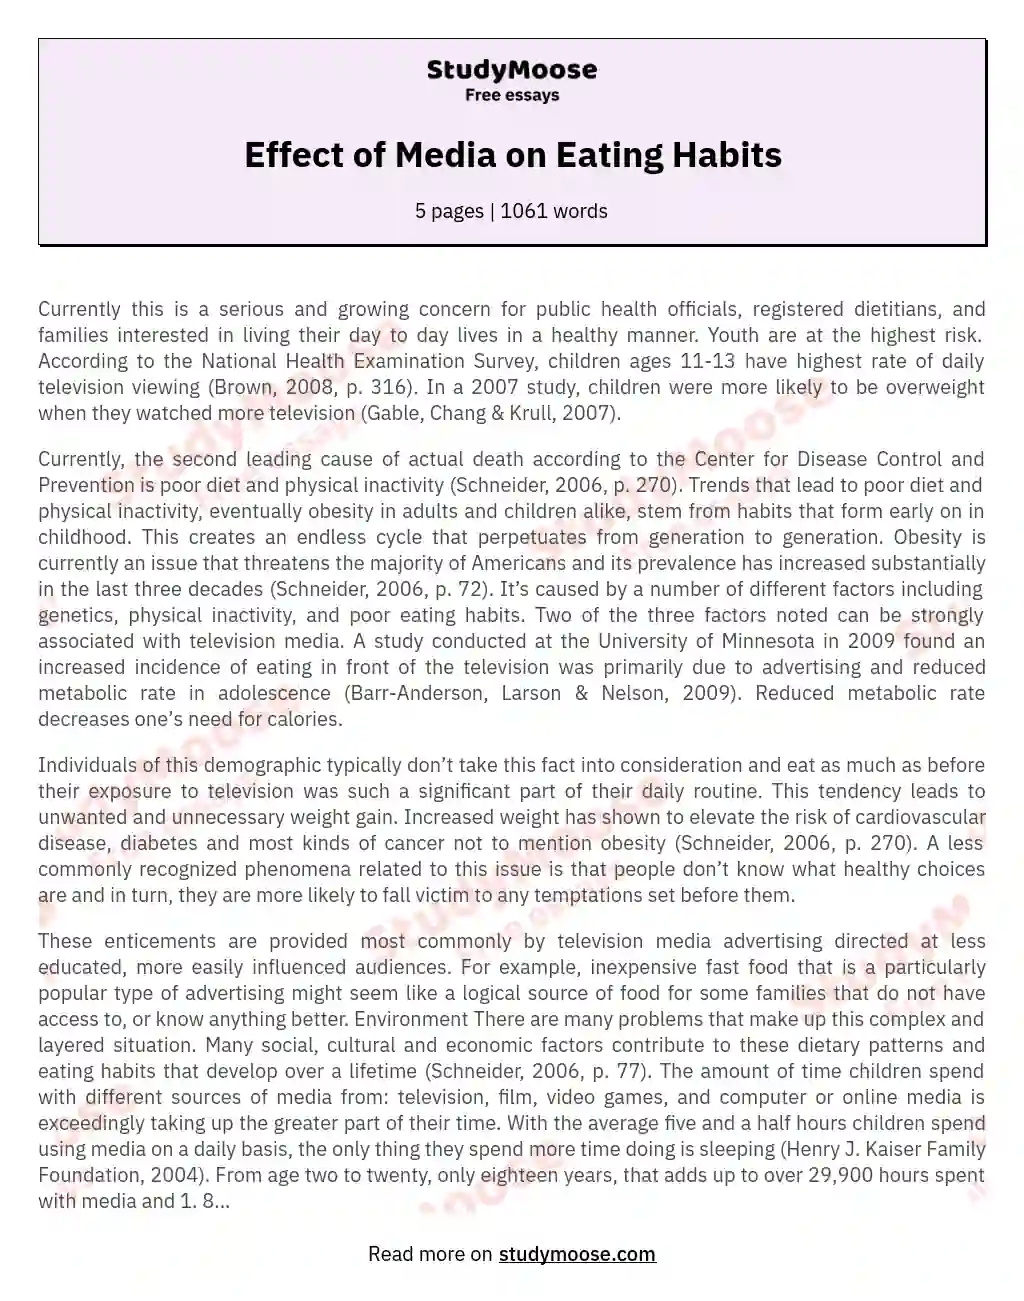 Effect of Media on Eating Habits essay